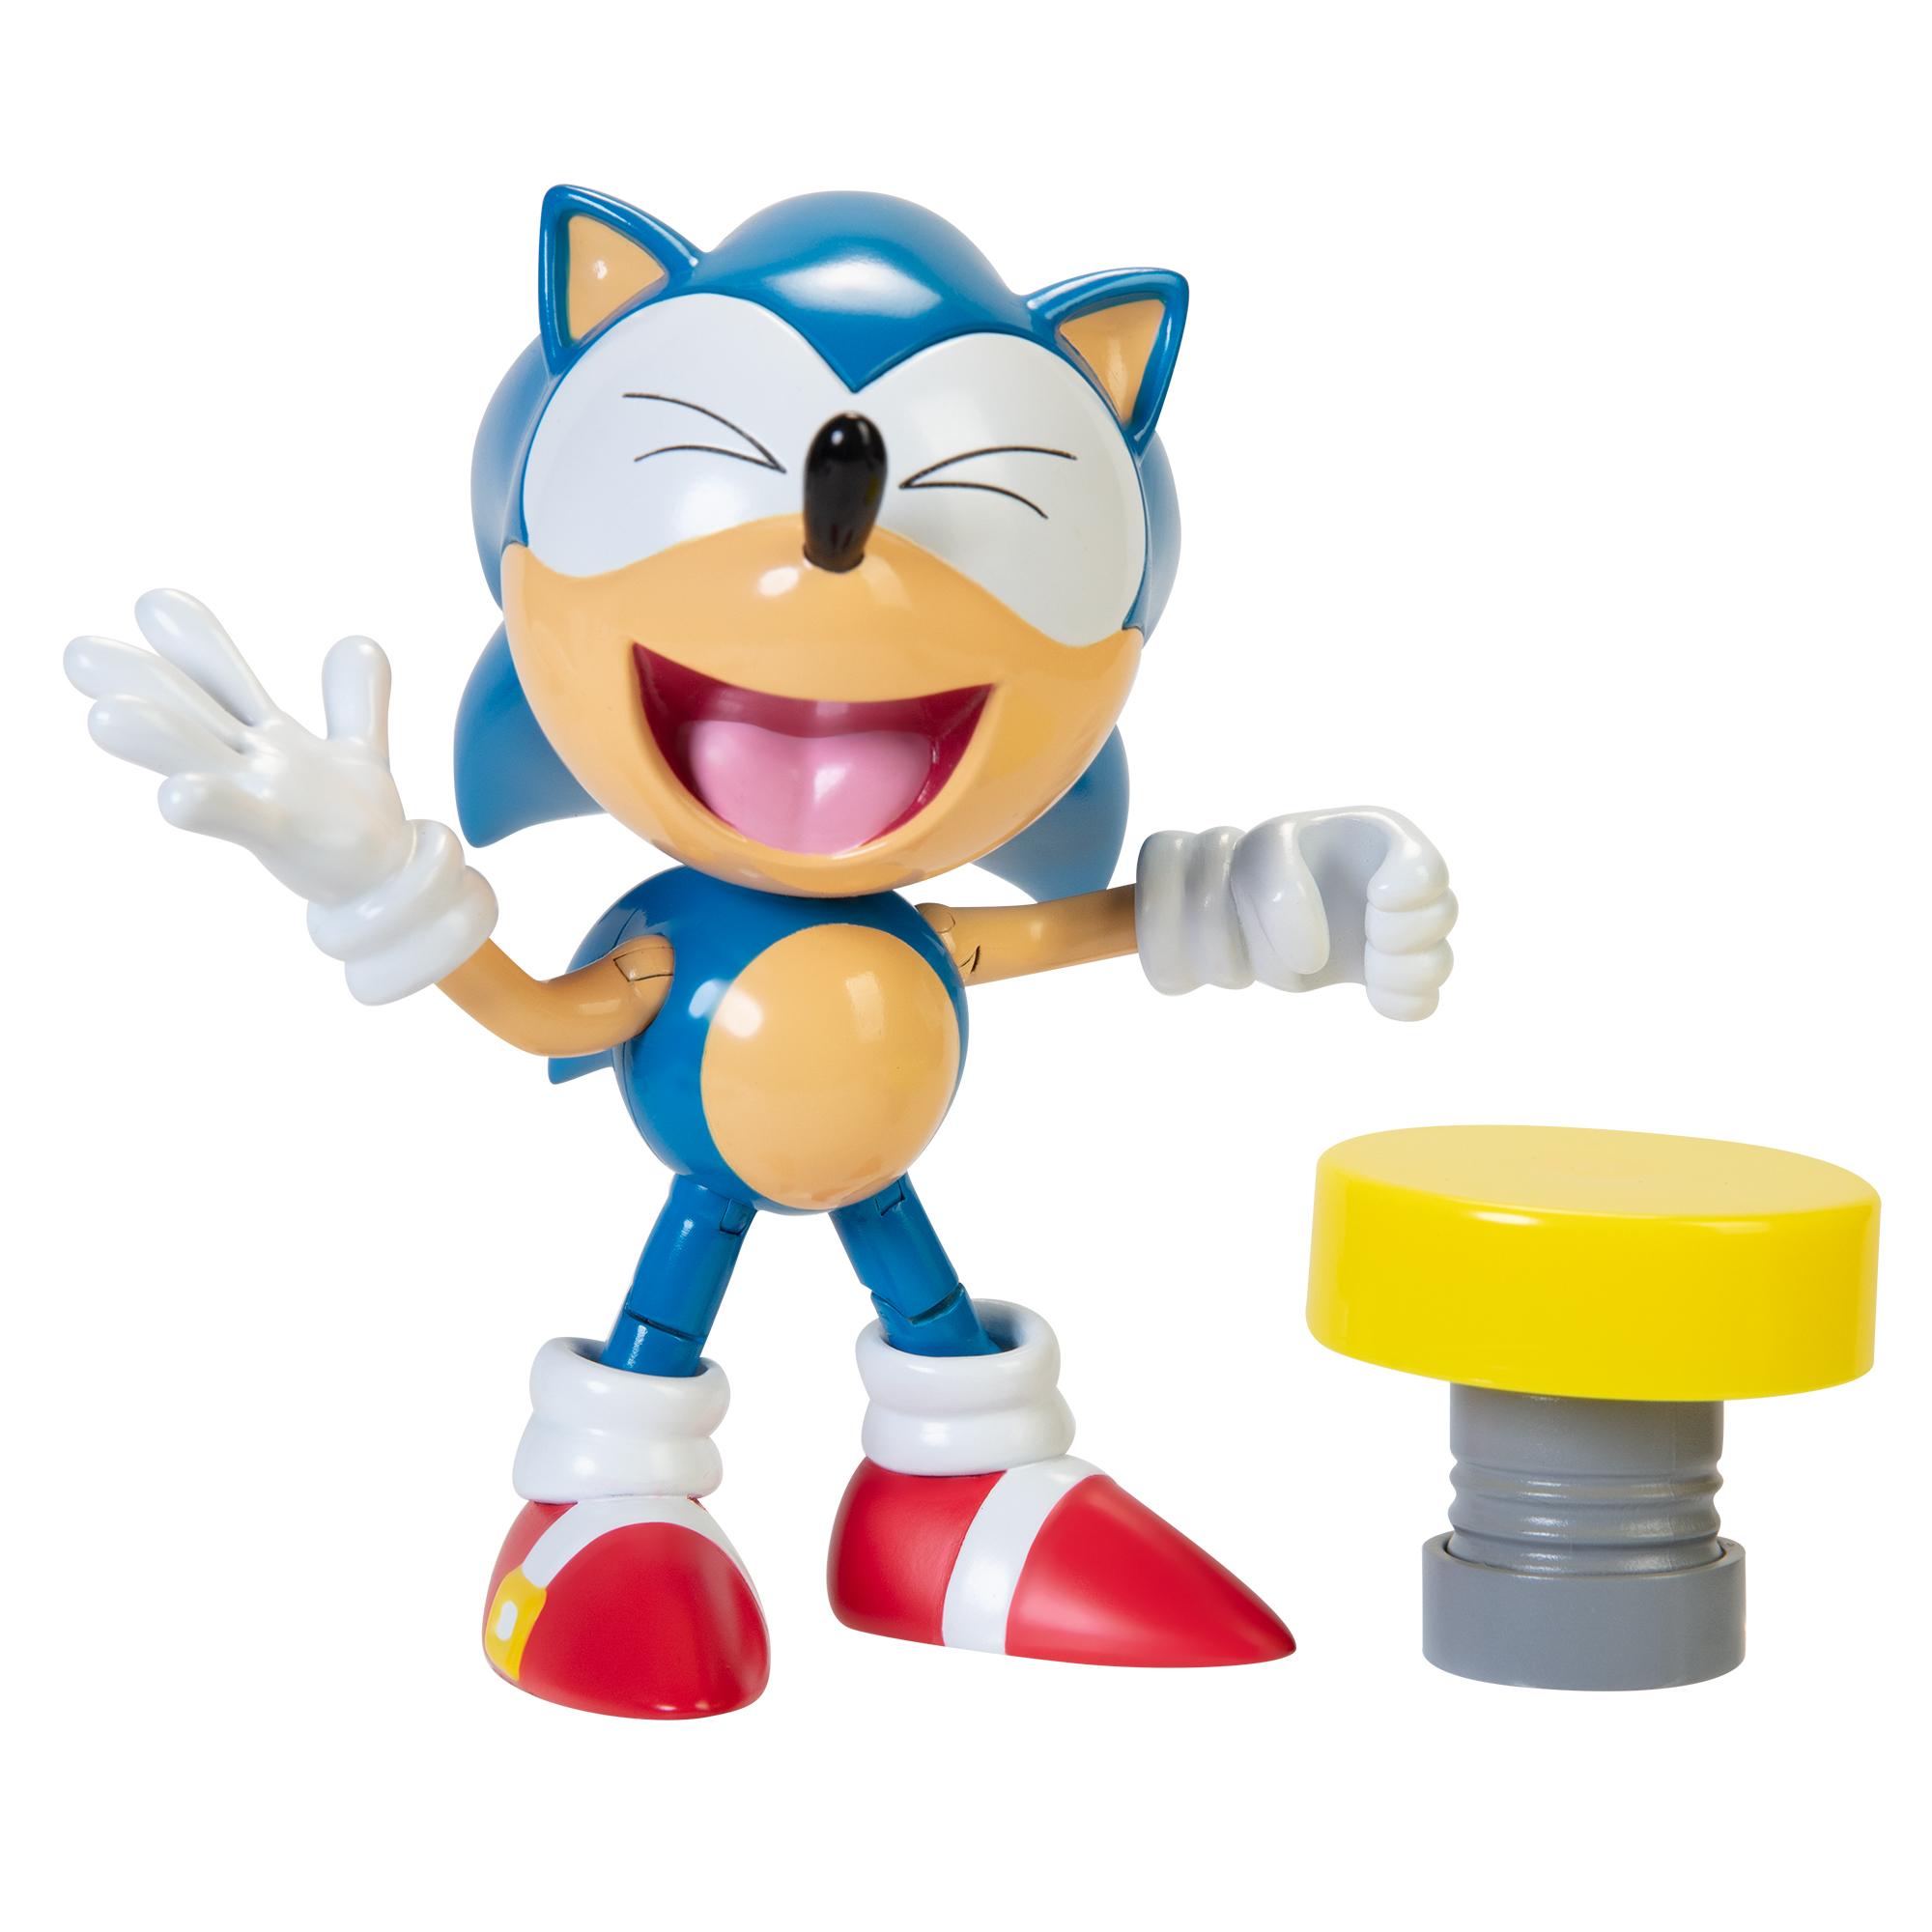 sonic_hedgehog Mecha Sonic Figurine Unboxing from @jakkspacific